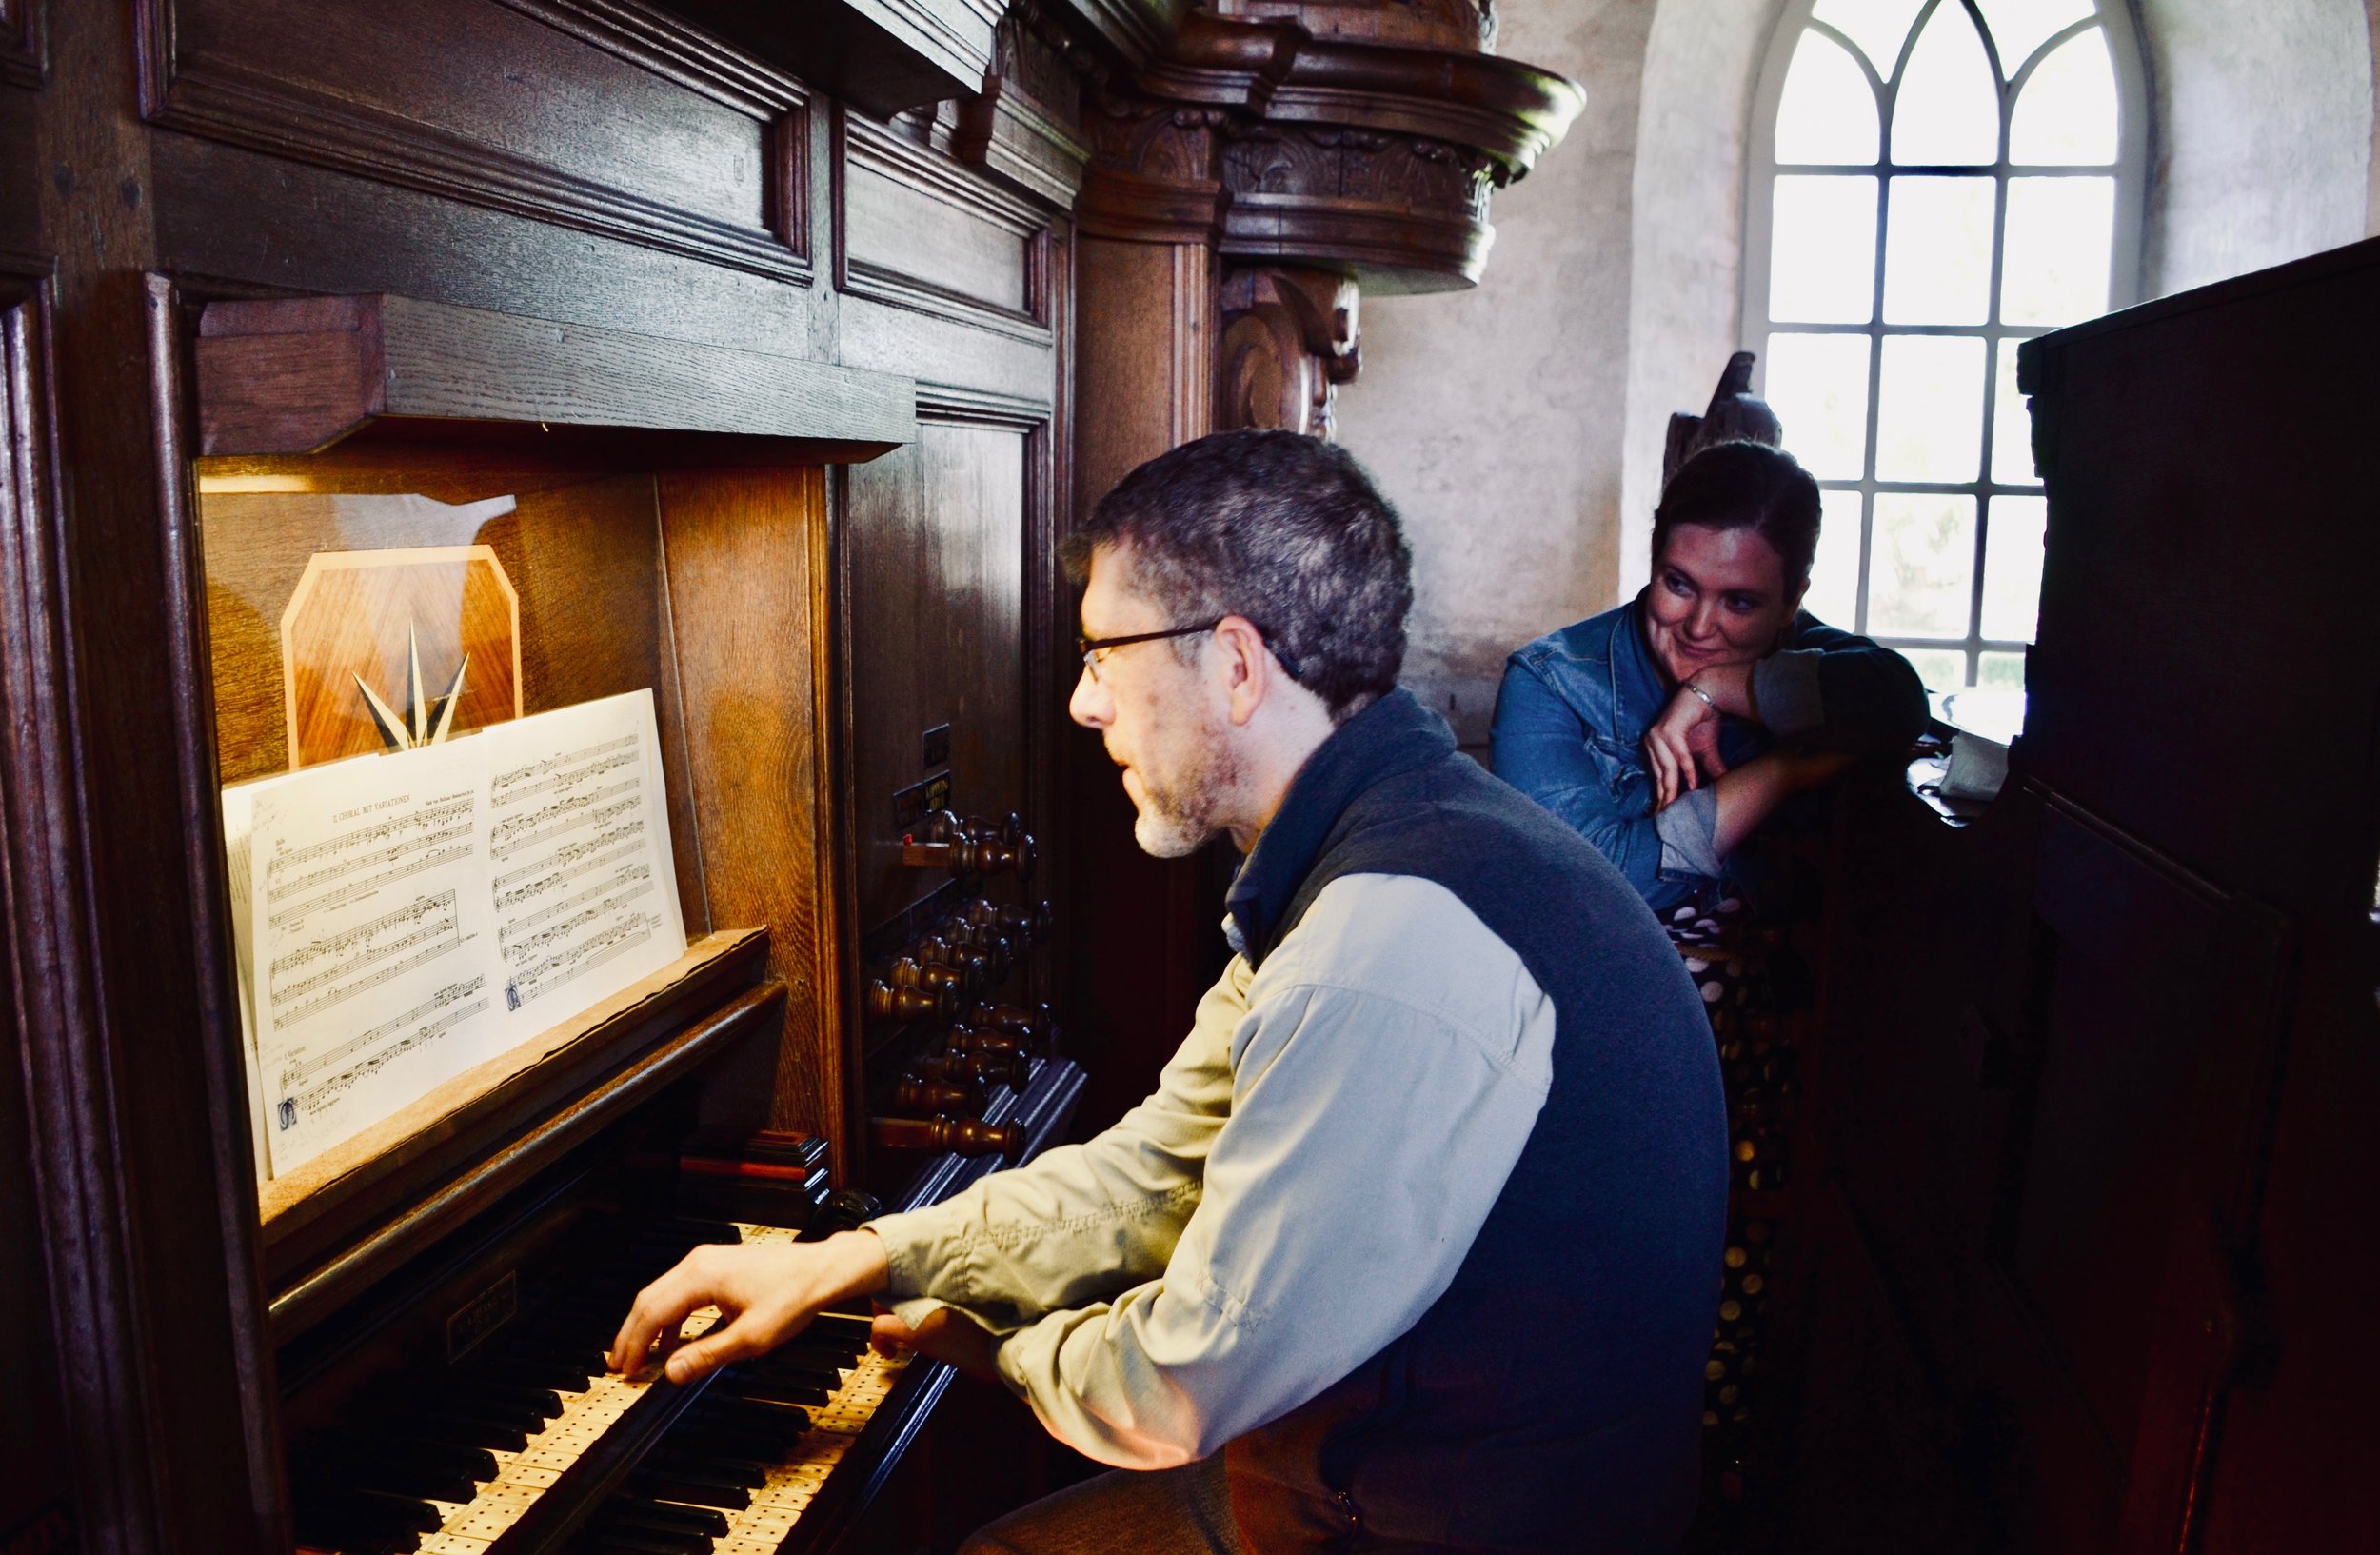  Chris Porter plays the Hinsz Organ in Leens, Holland. 